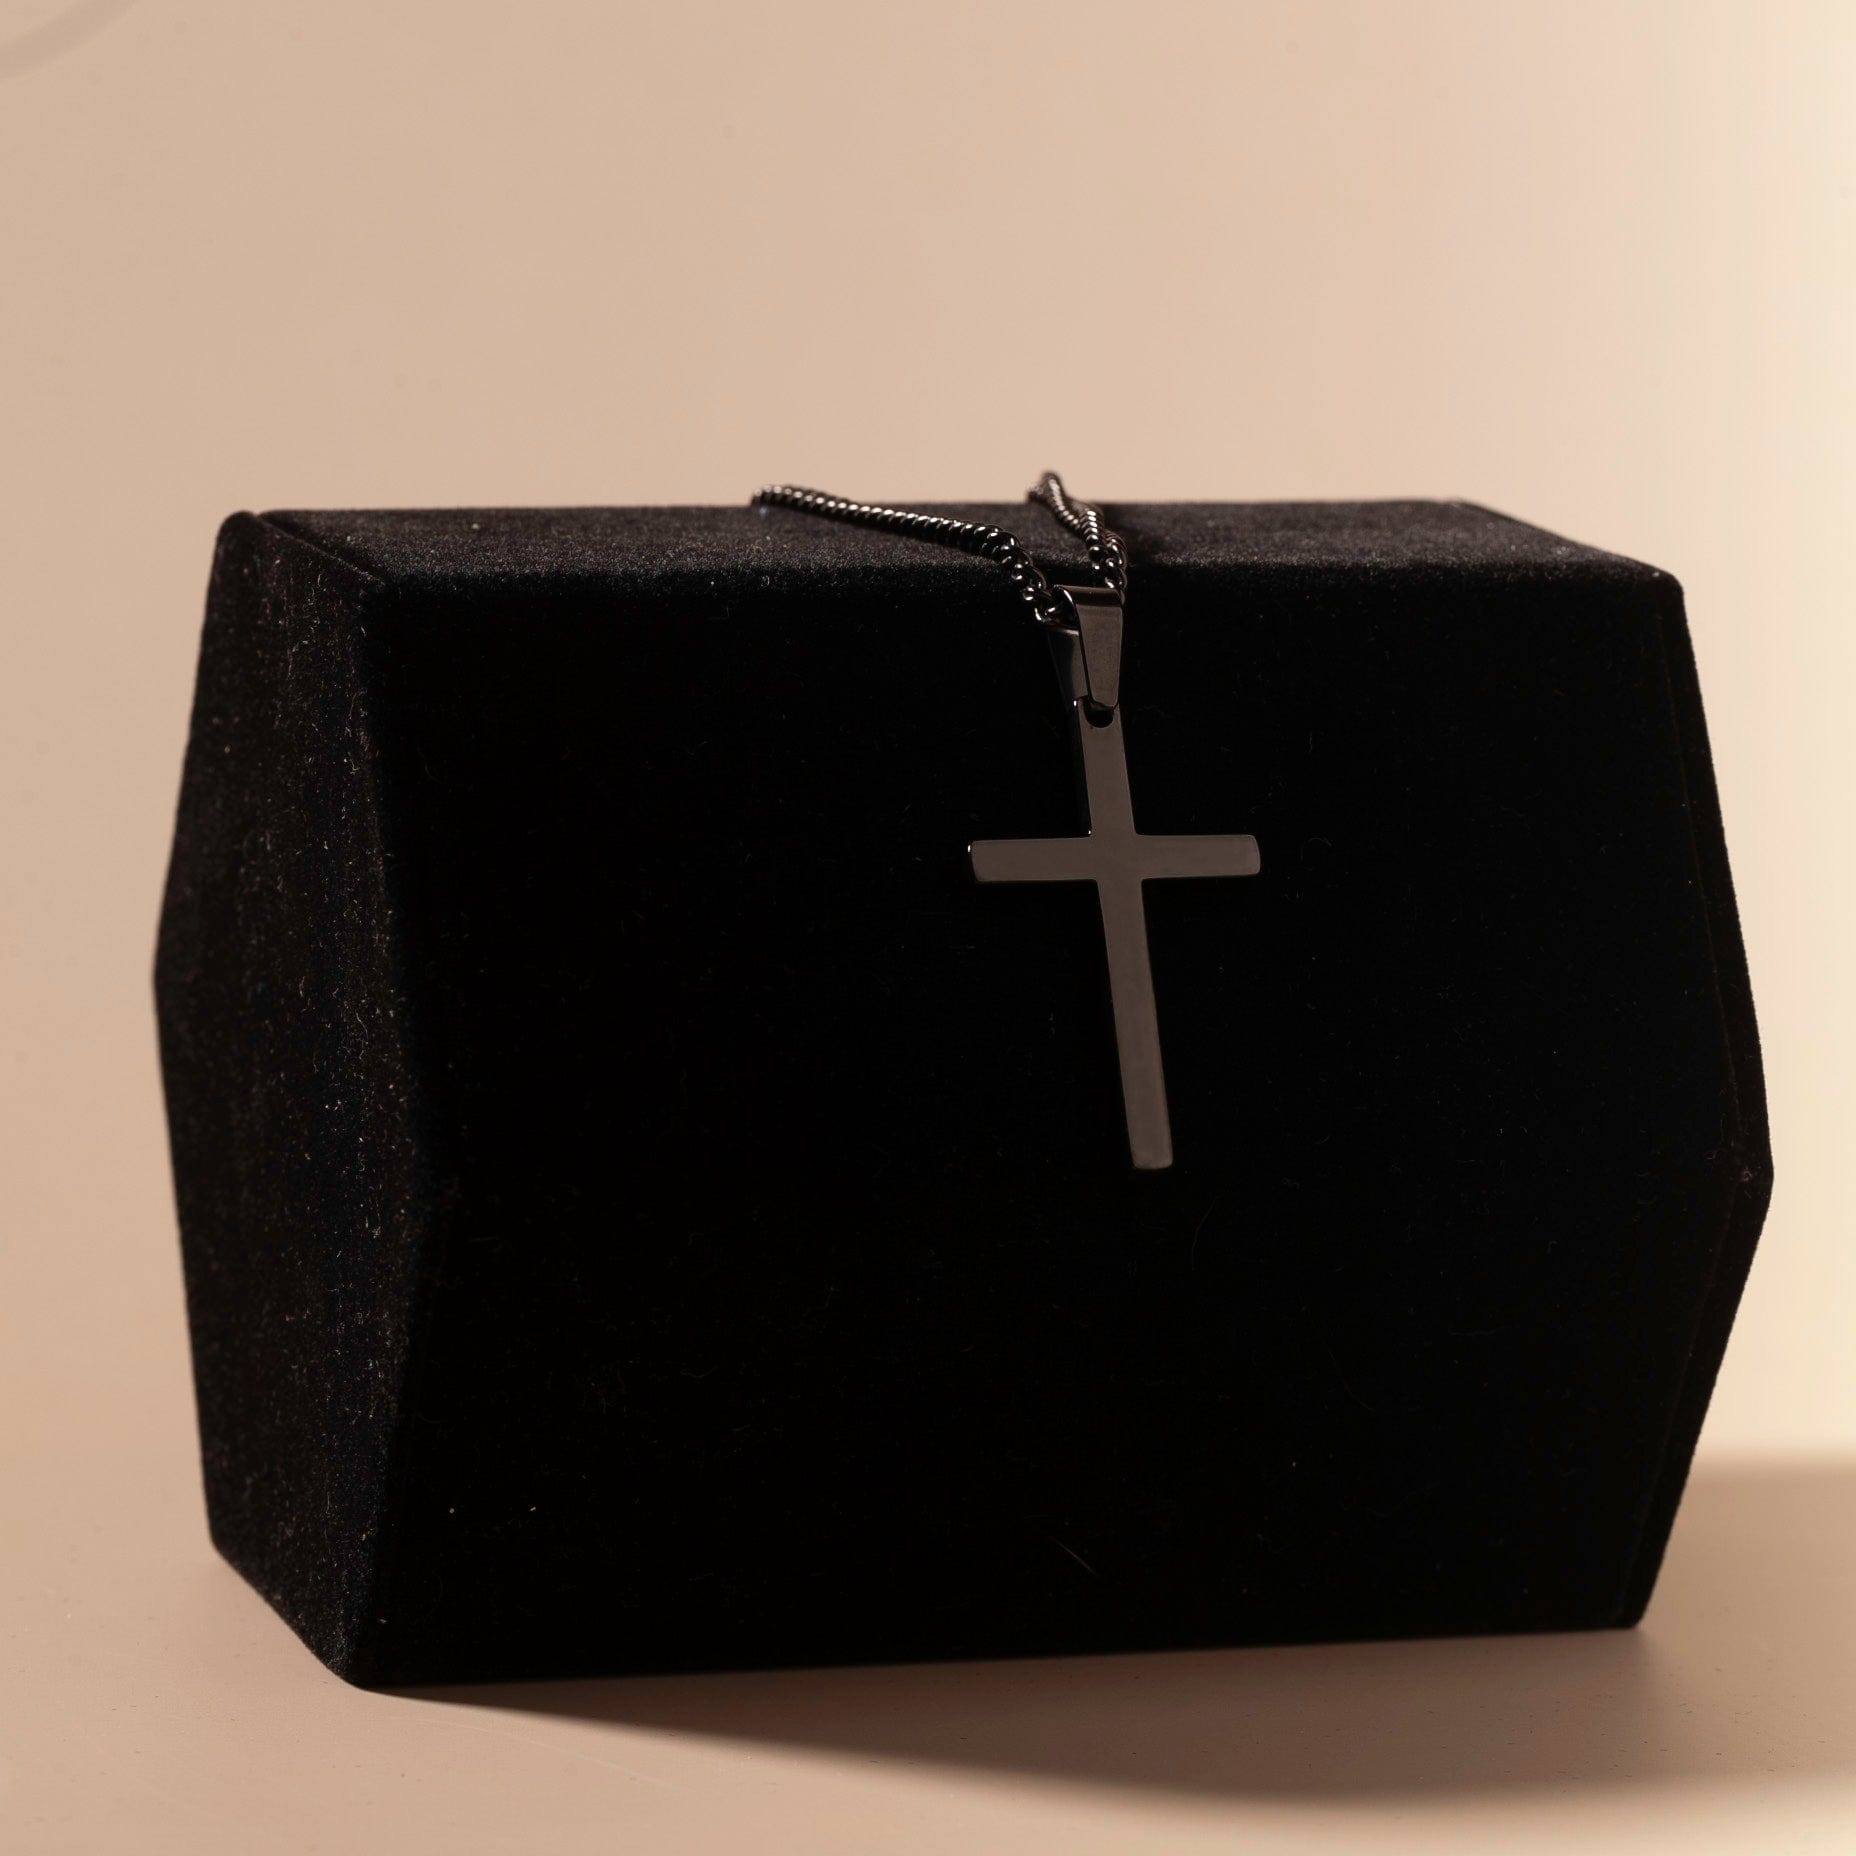 Large Cross Pendant - Black